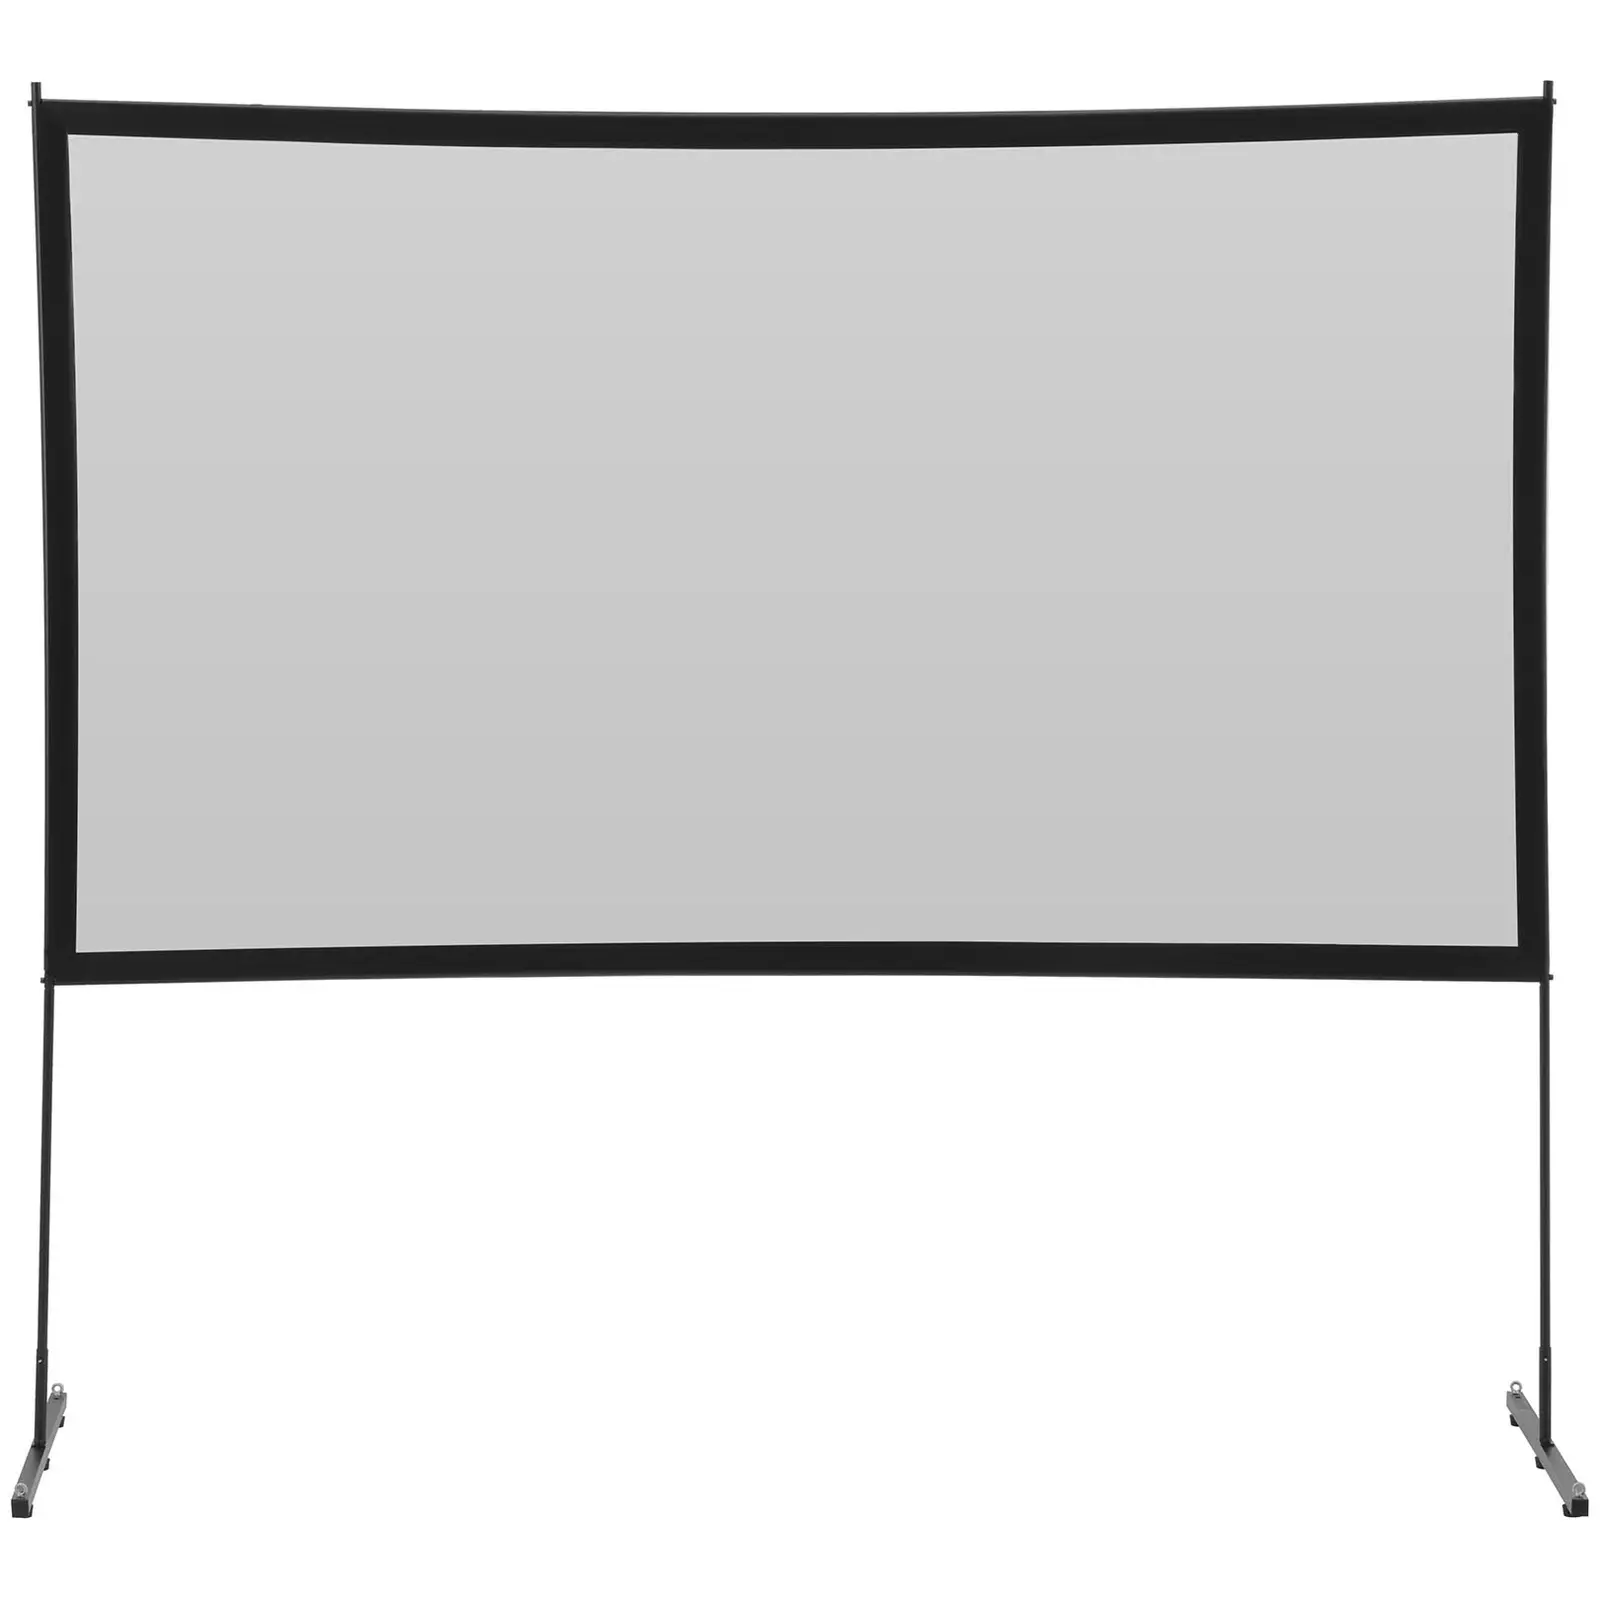 Projector Screen - 221.2 x 124.5 cm - 16:9 - 100" - steel frame